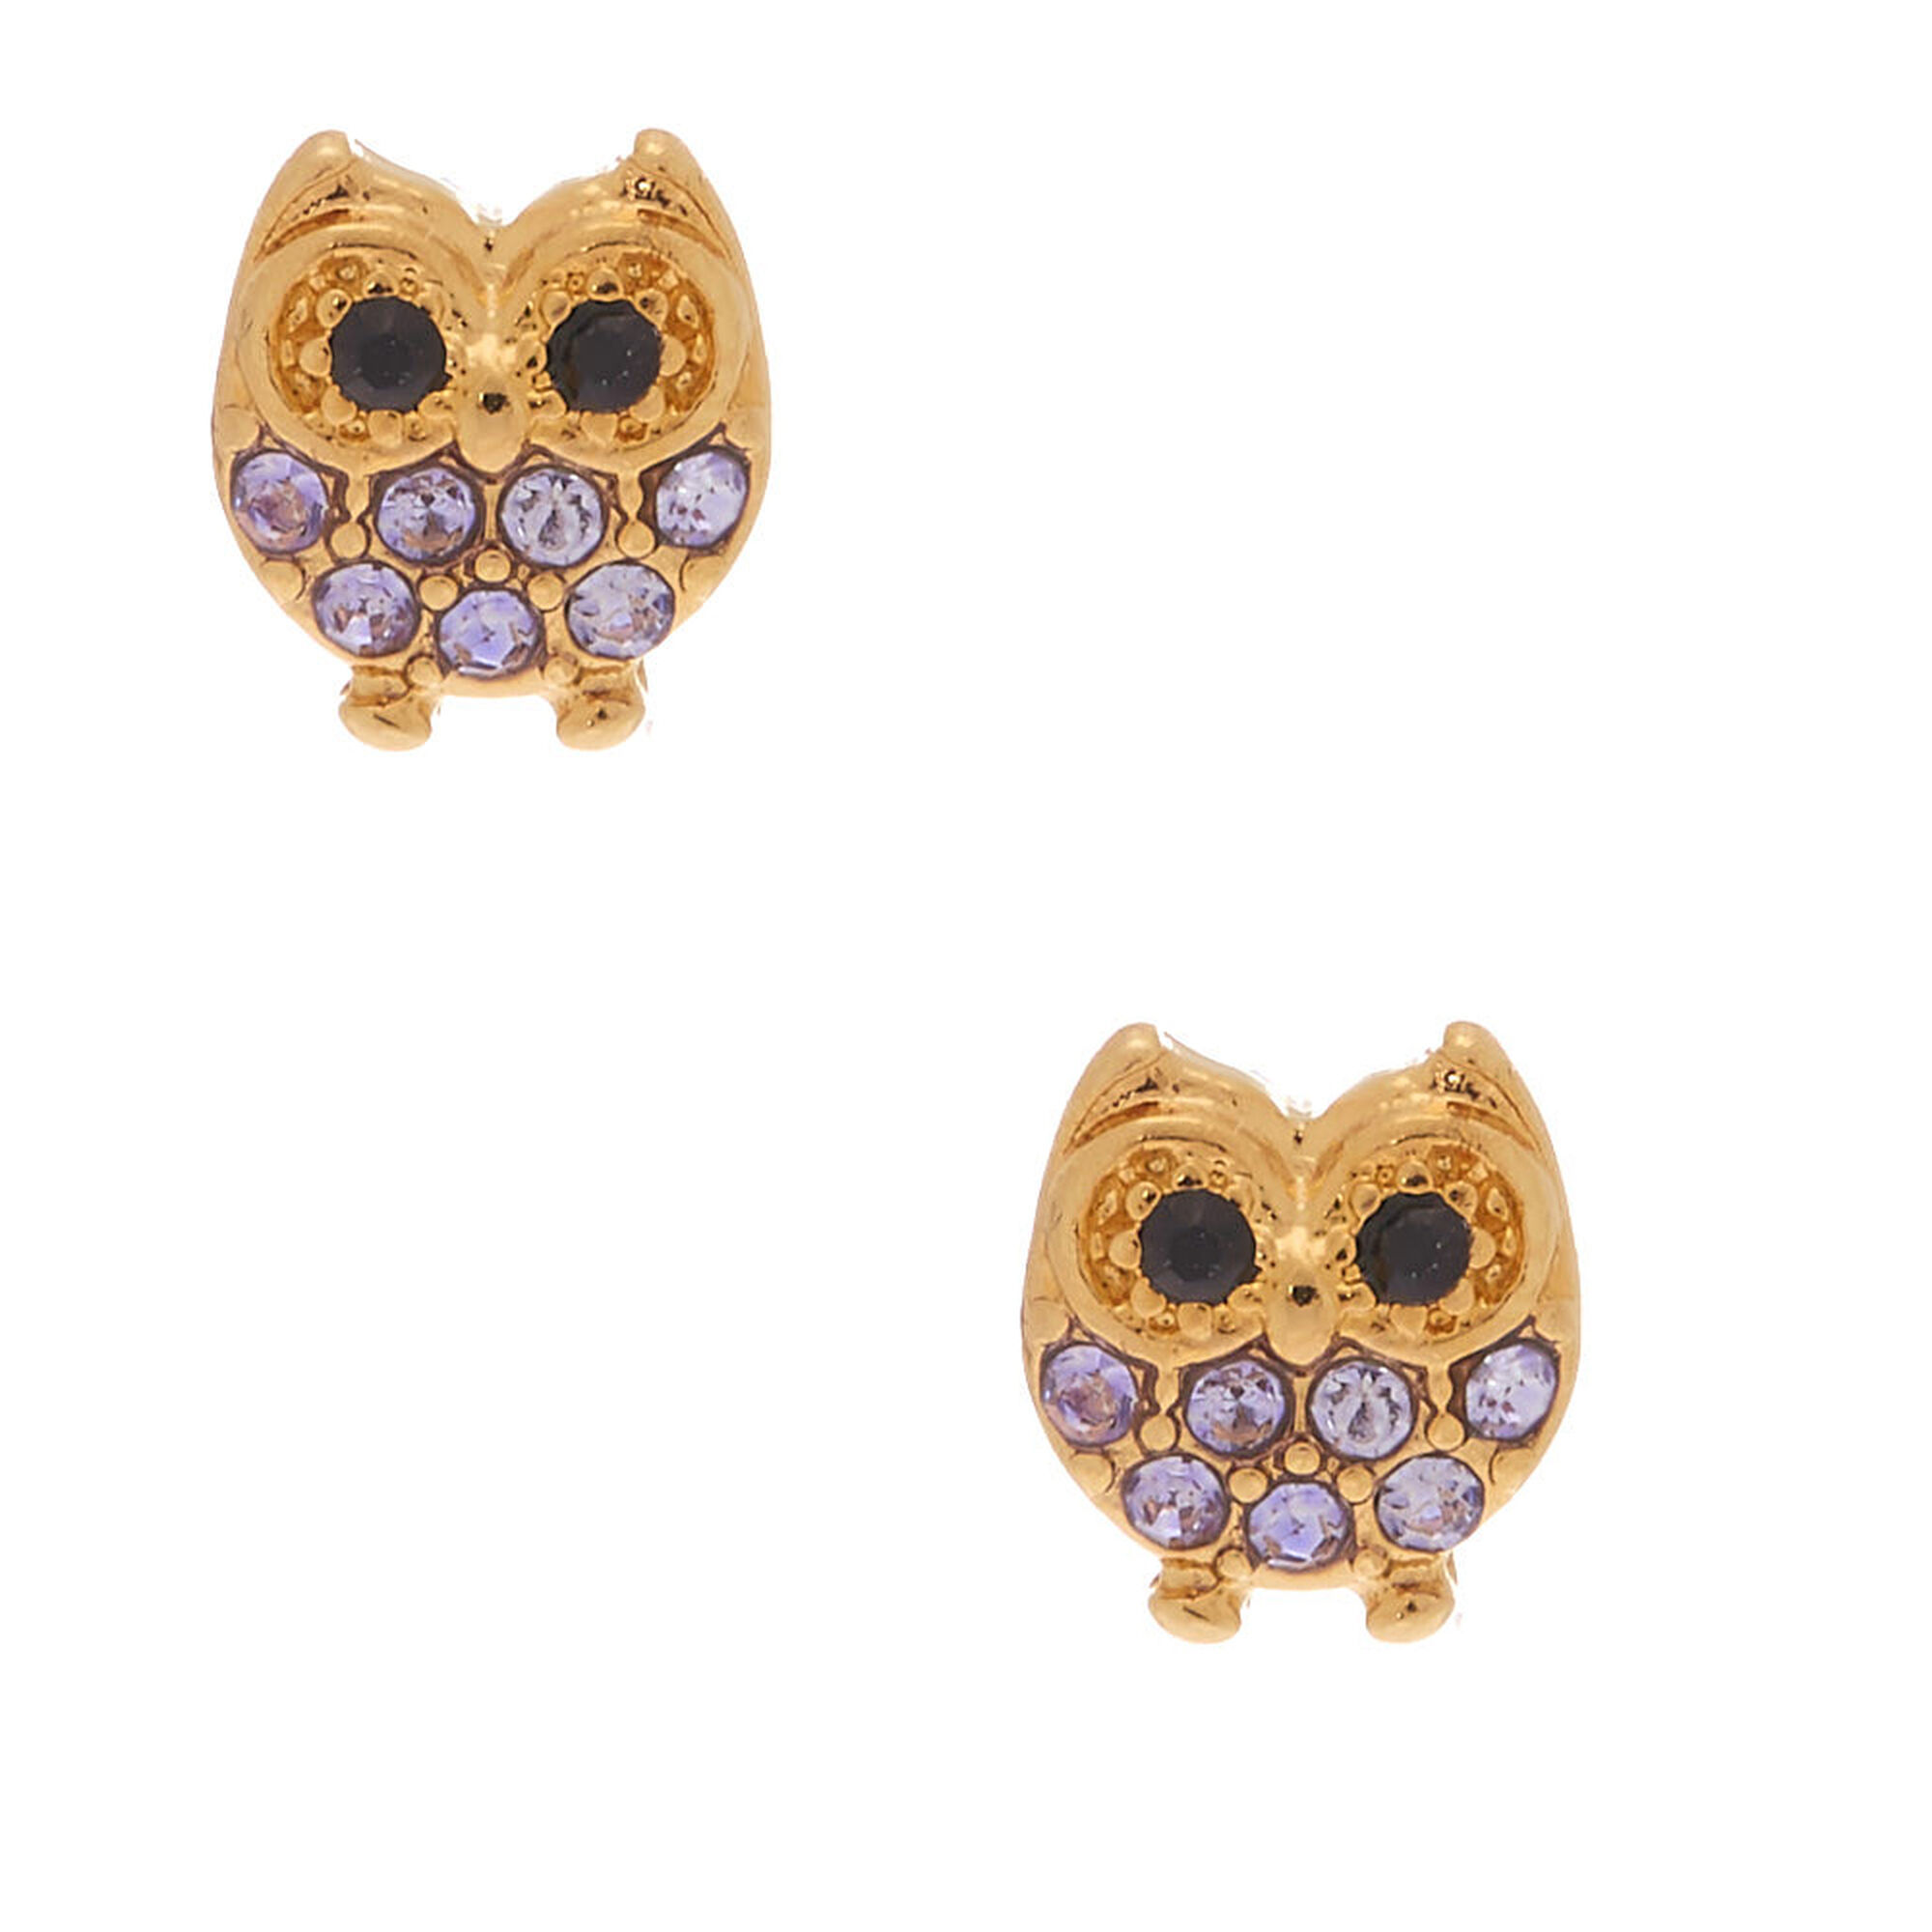 Tiny Stud Earrings Pink and Purple Earrings Polymer Clay Owls Hypoallergenic Earrings Owl Jewelry Owl Gifts Cute Owl Earrings